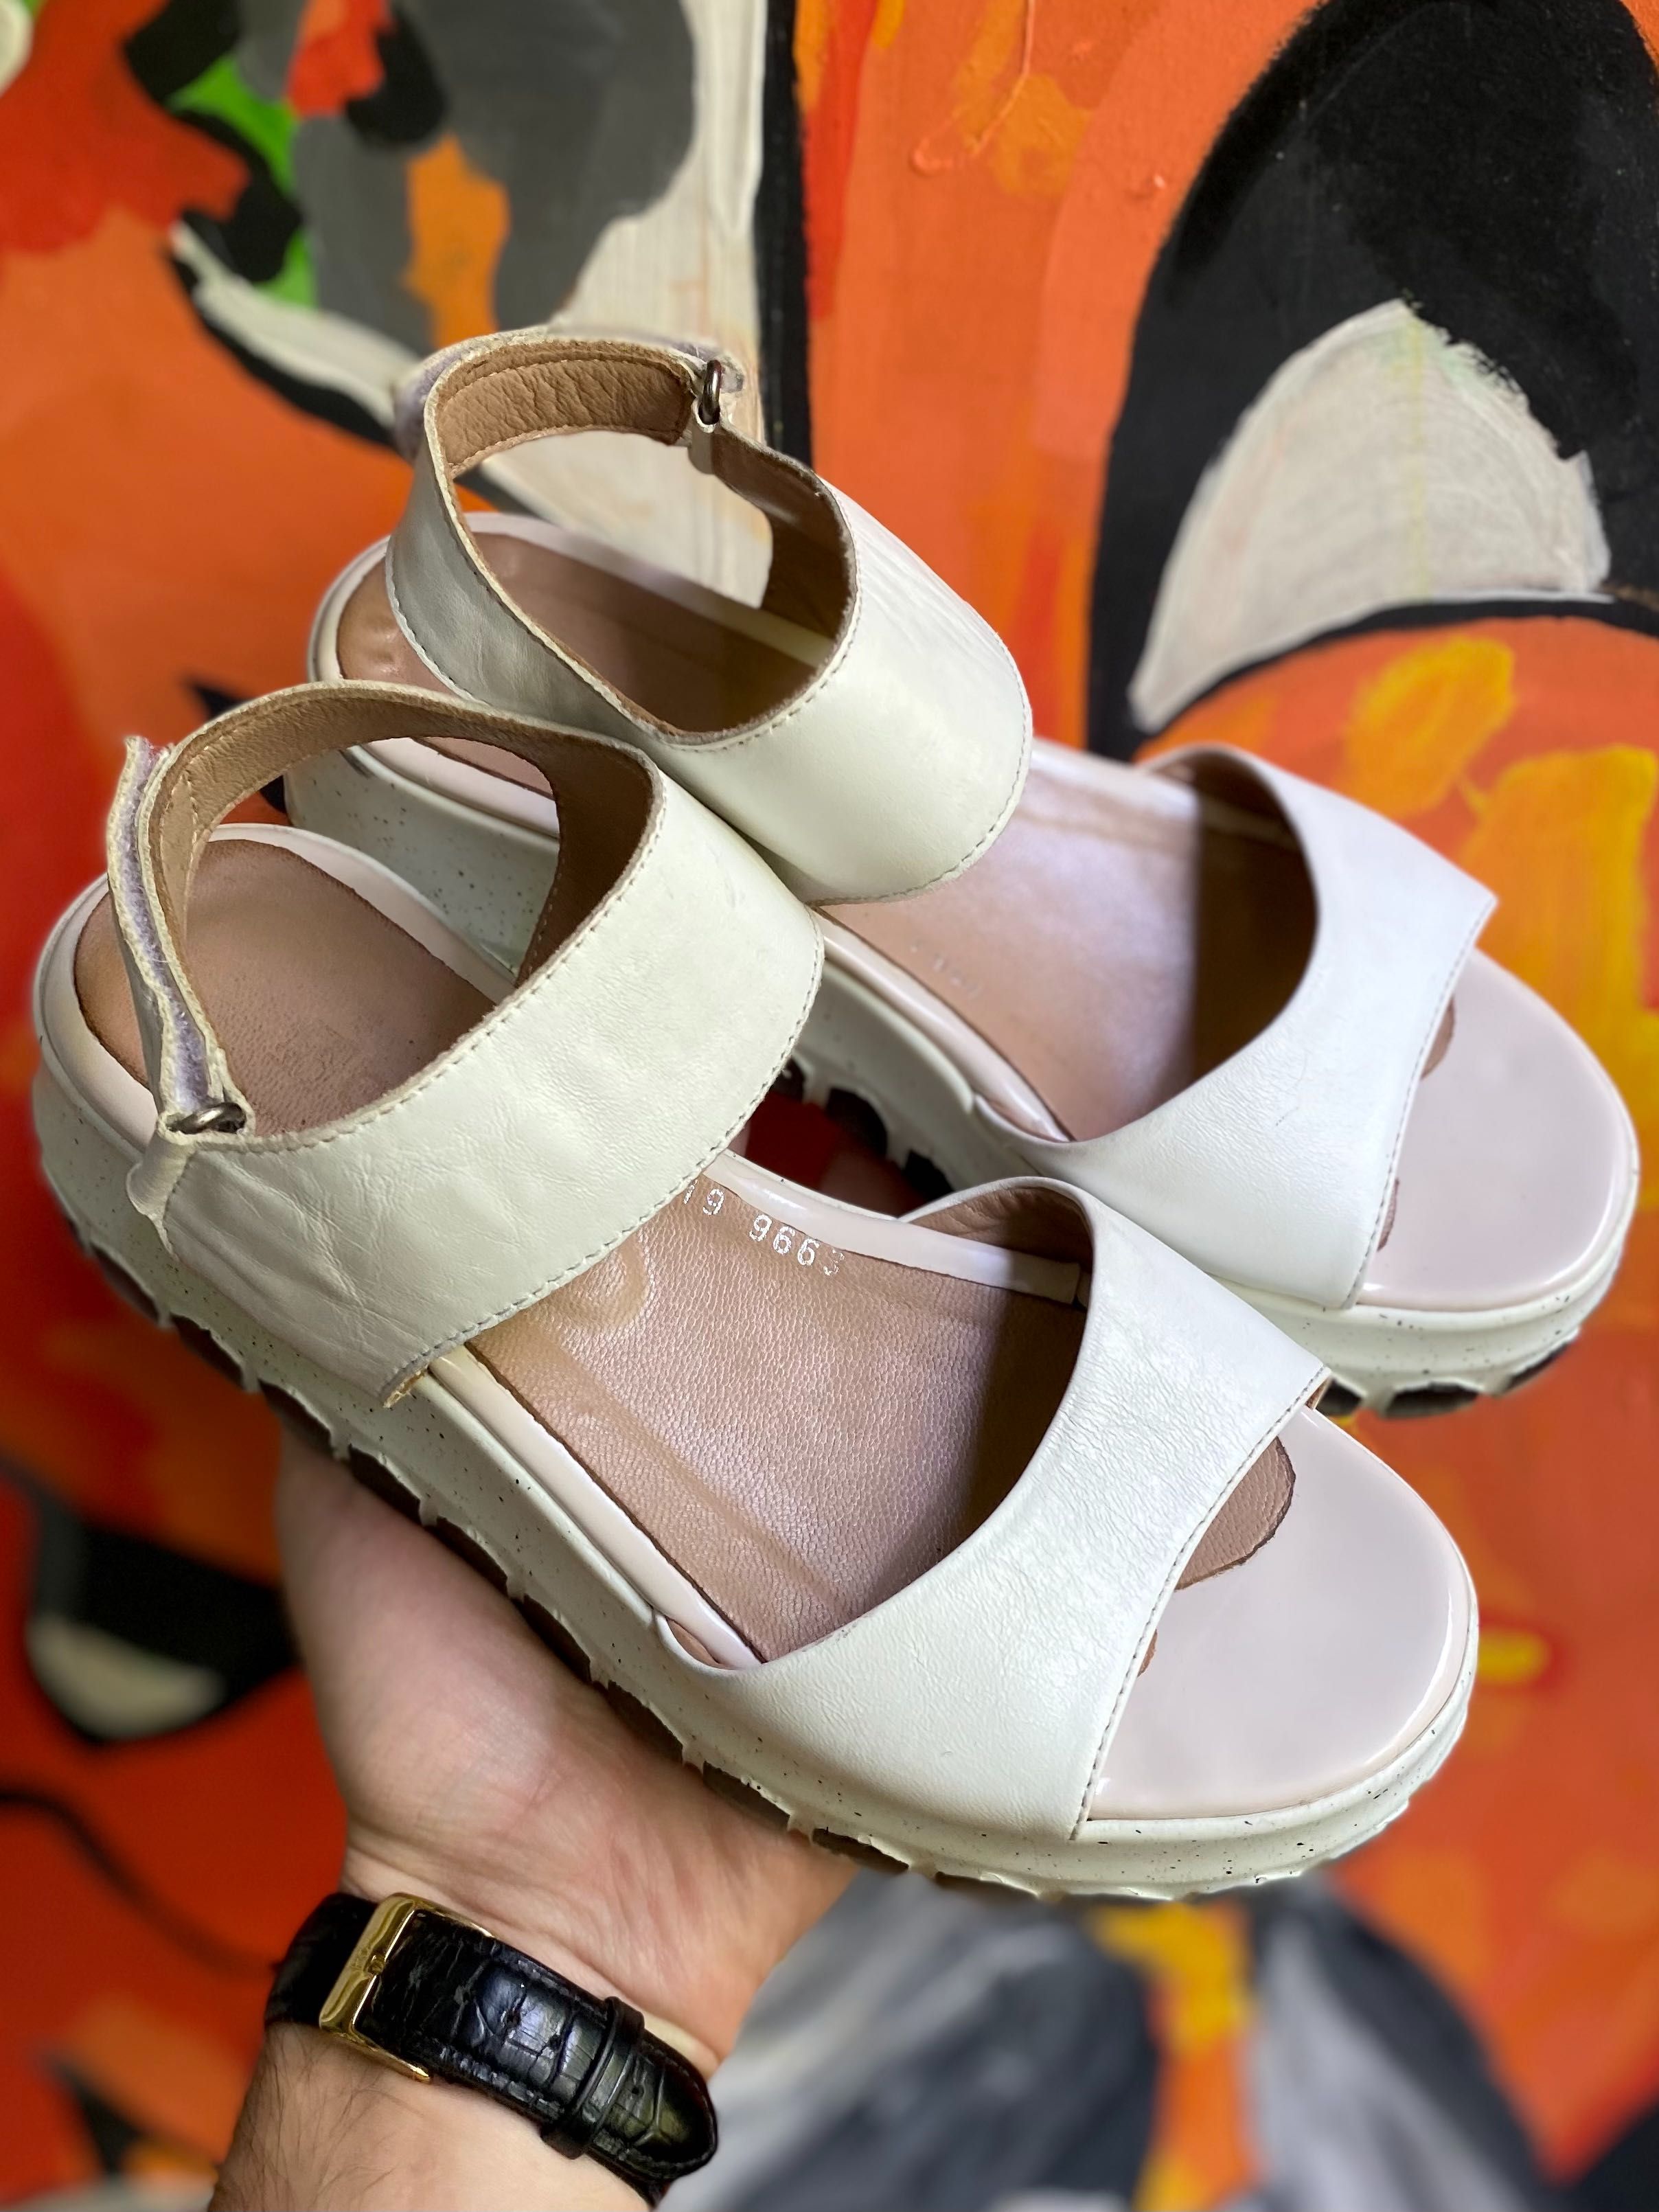 Guero Phany сандали босоножки 36 размер женские кожаные белые оригинал